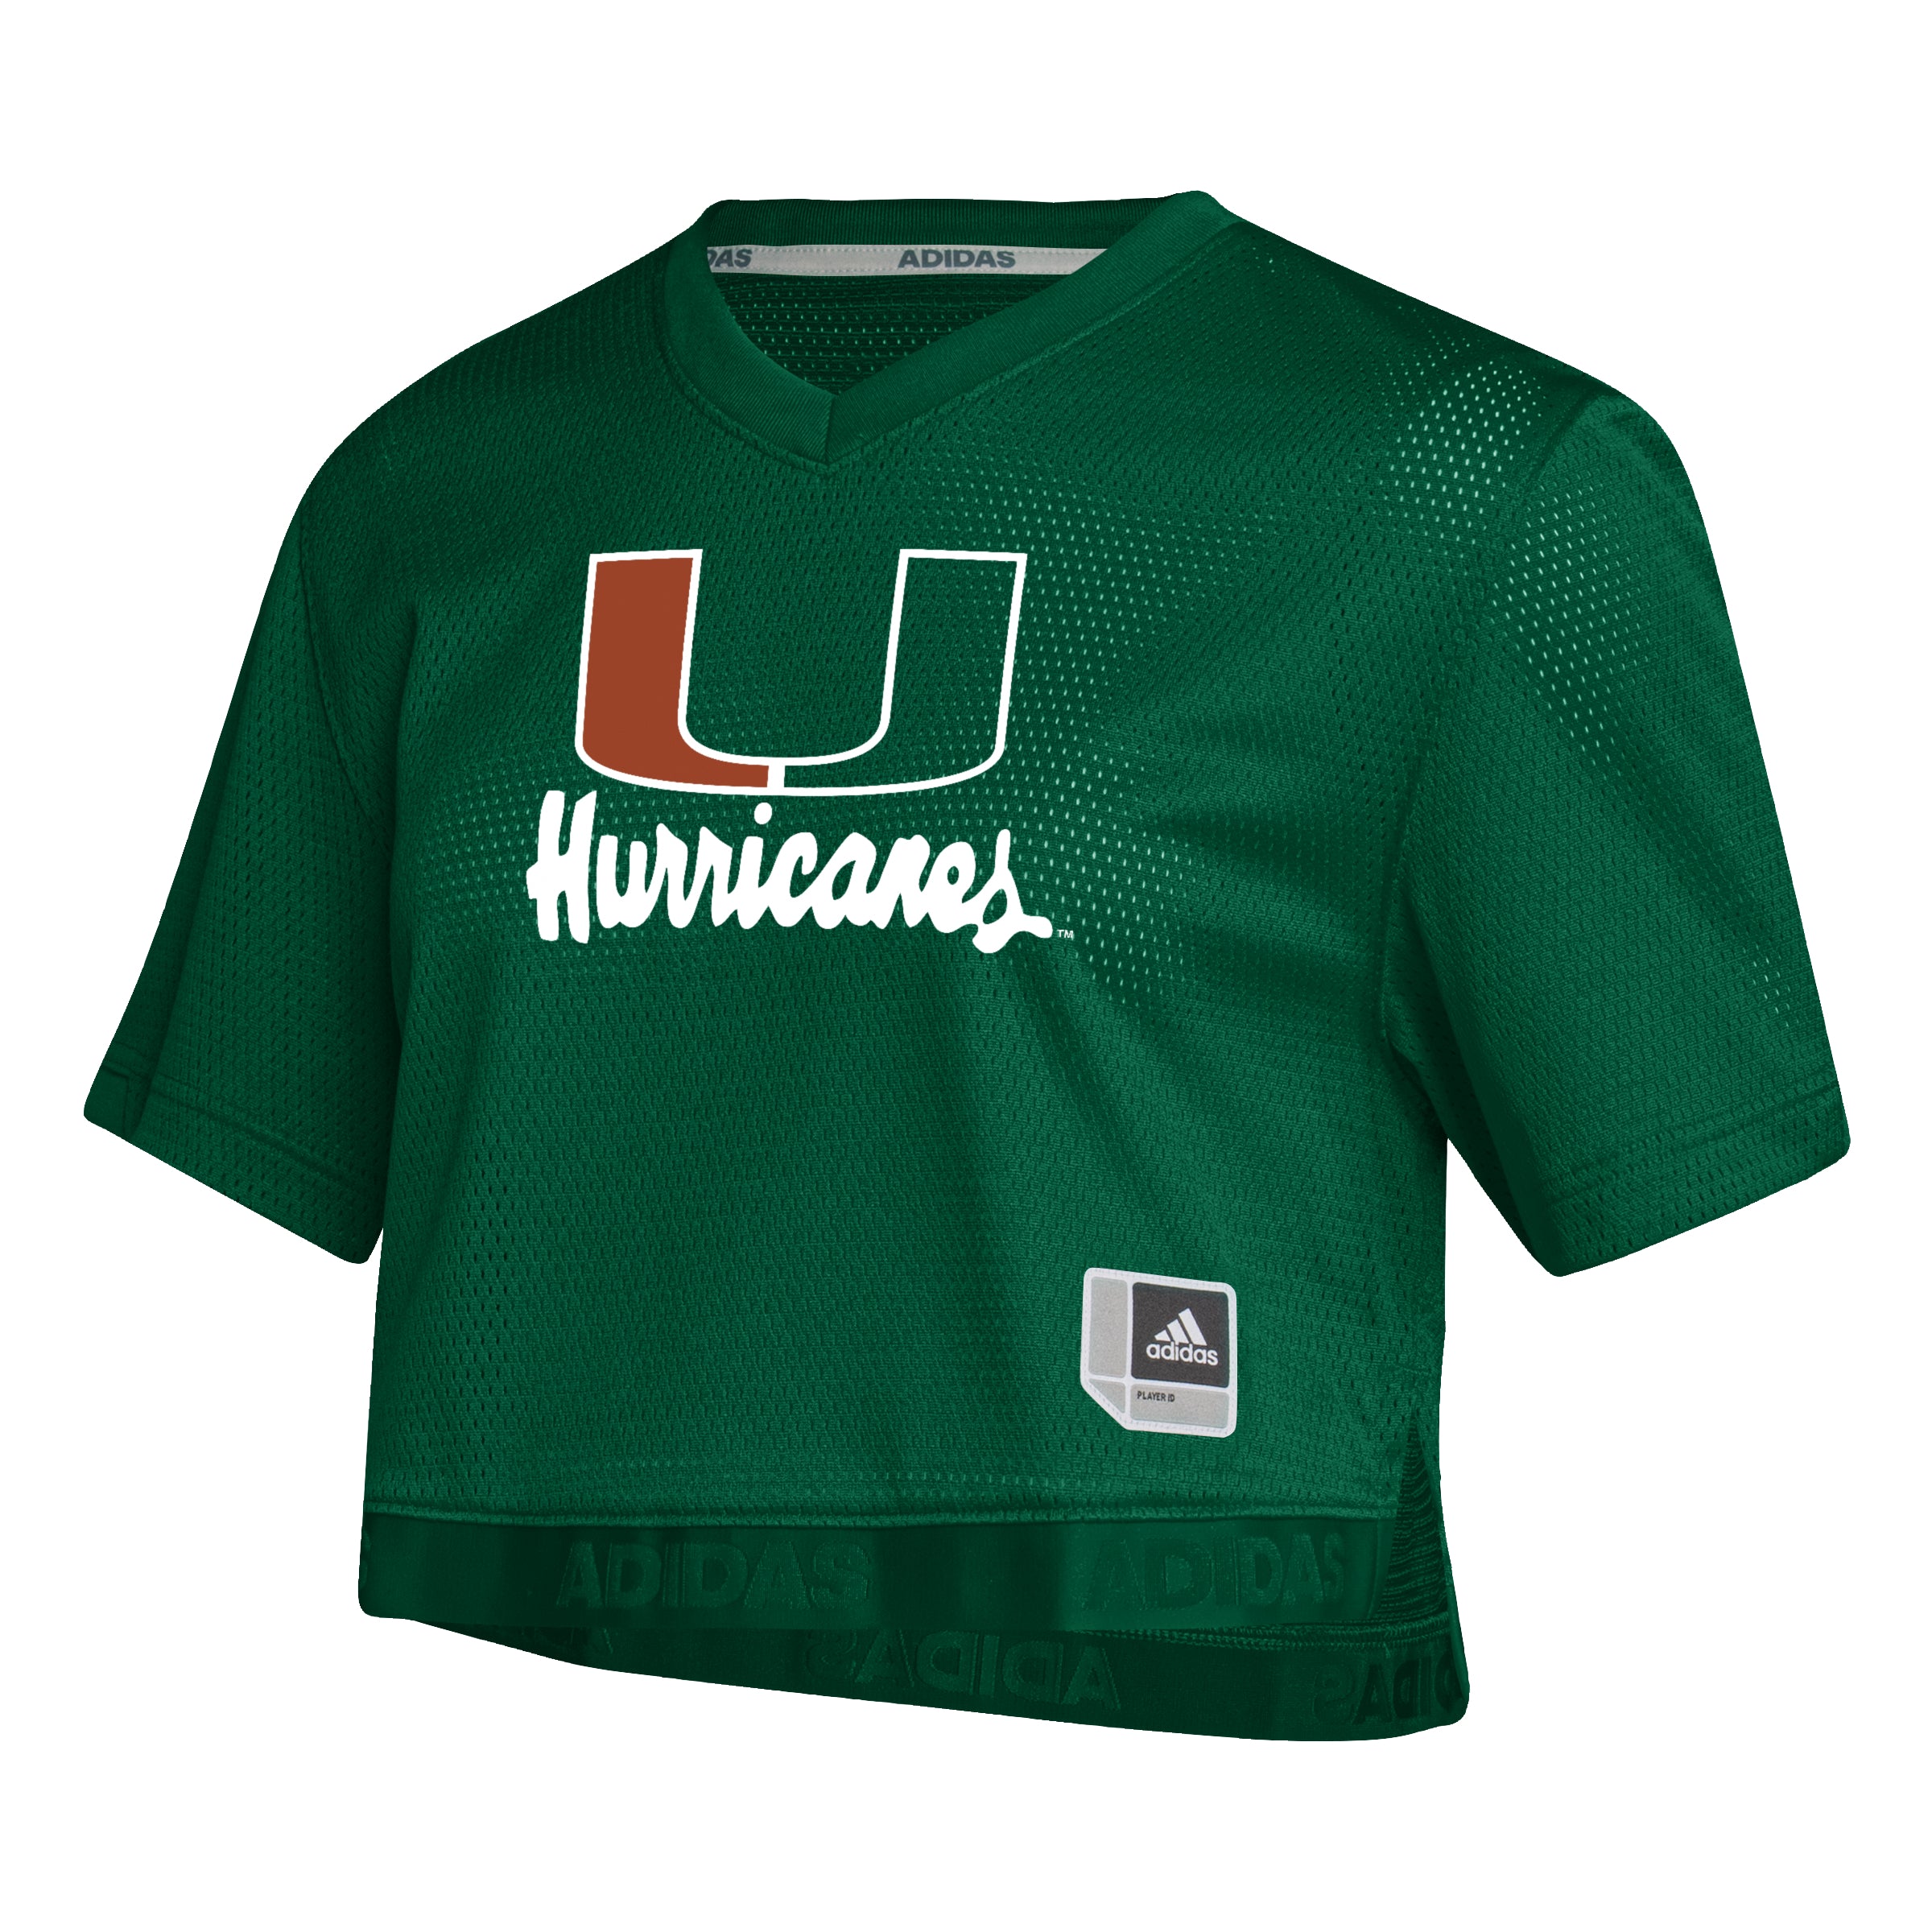 Miami Hurricanes adidas Womens Crop Top Jersey - Green